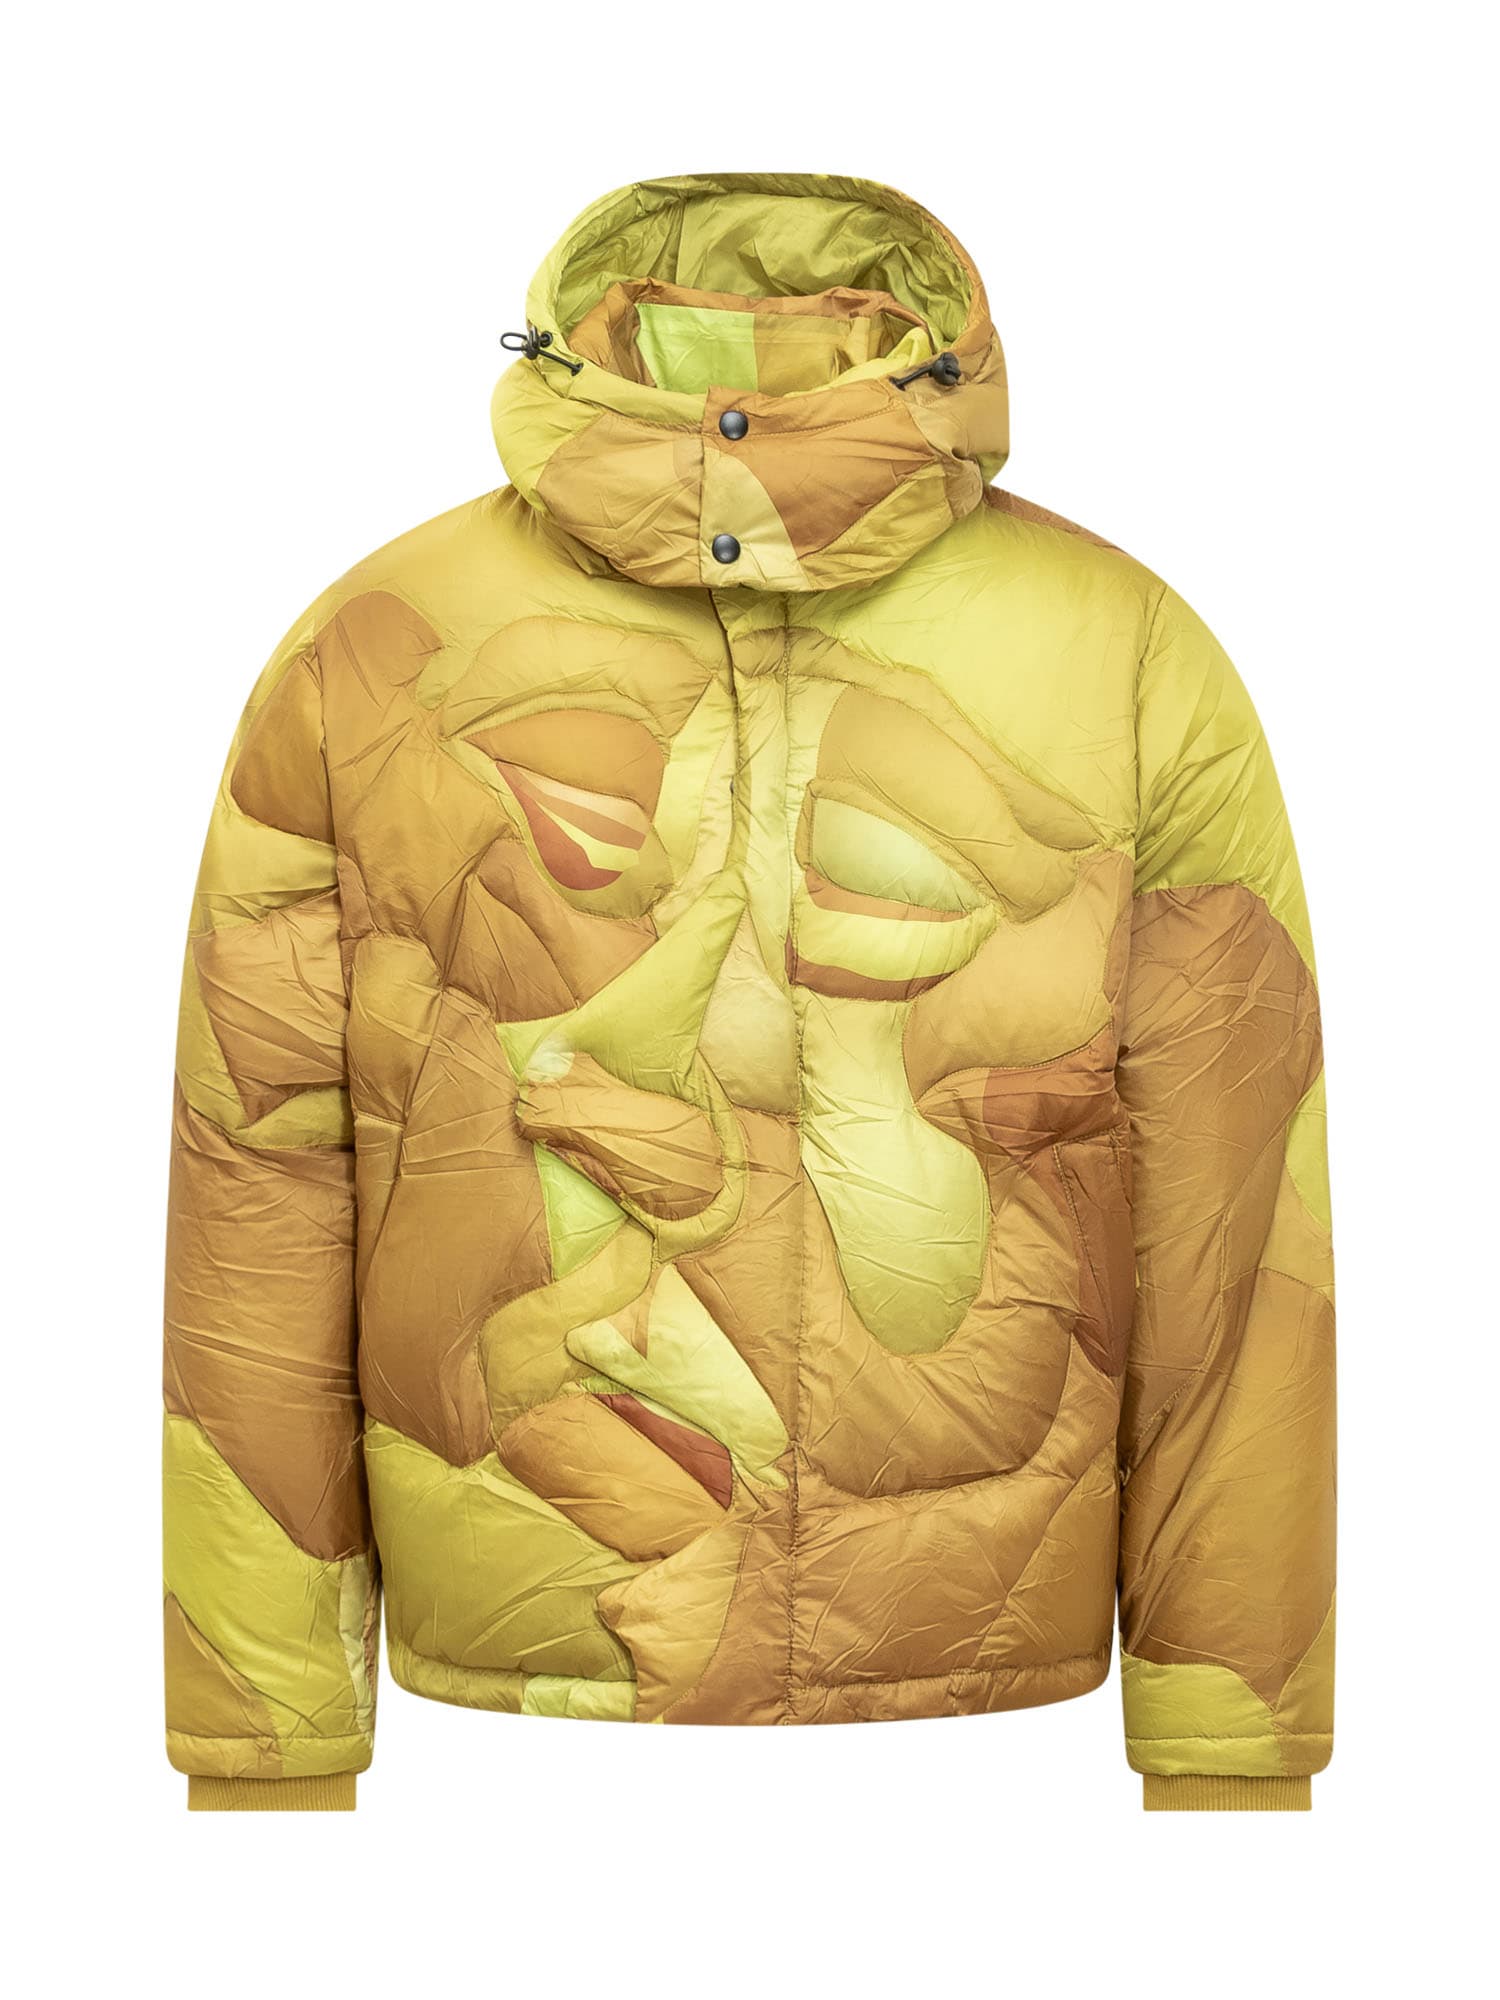 KidSuper Graphic Print Hooded Puffer Jacket - Farfetch